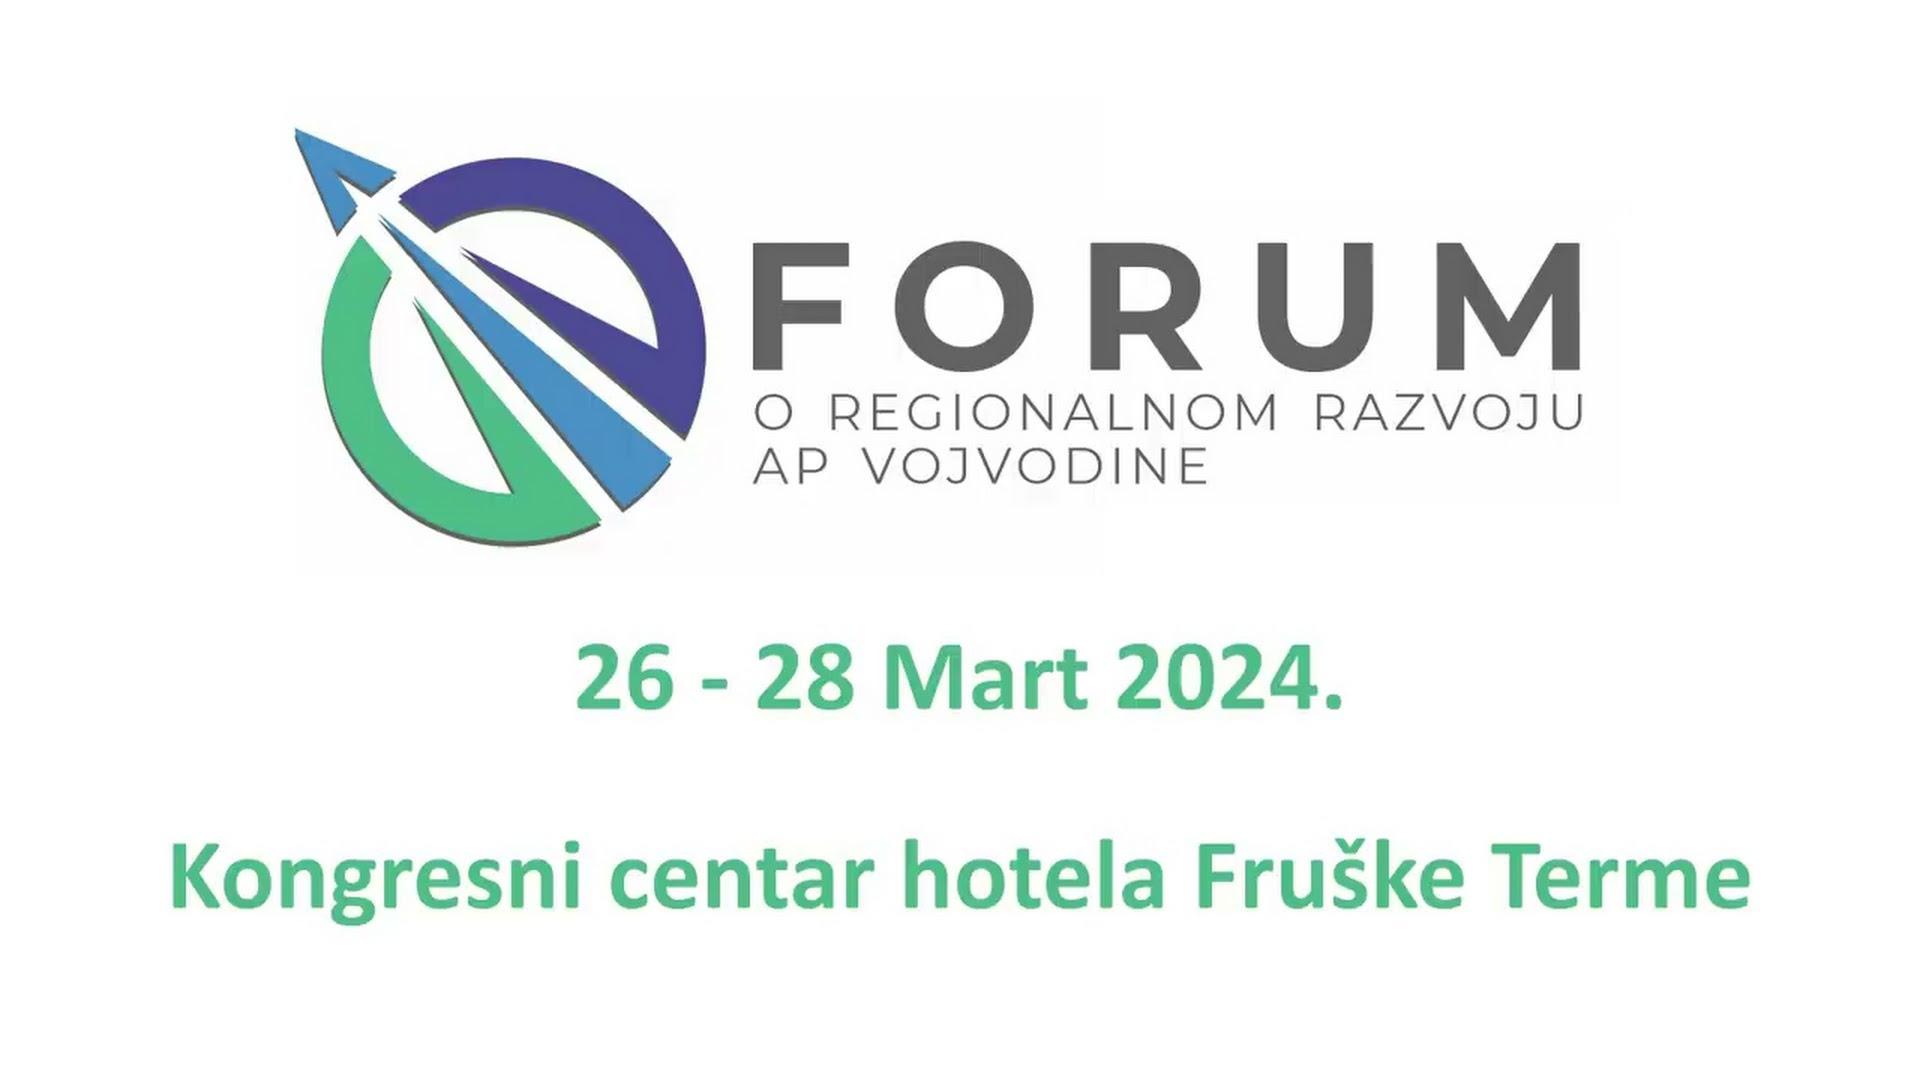 Forum o regionalnom razvoju Vojvodine